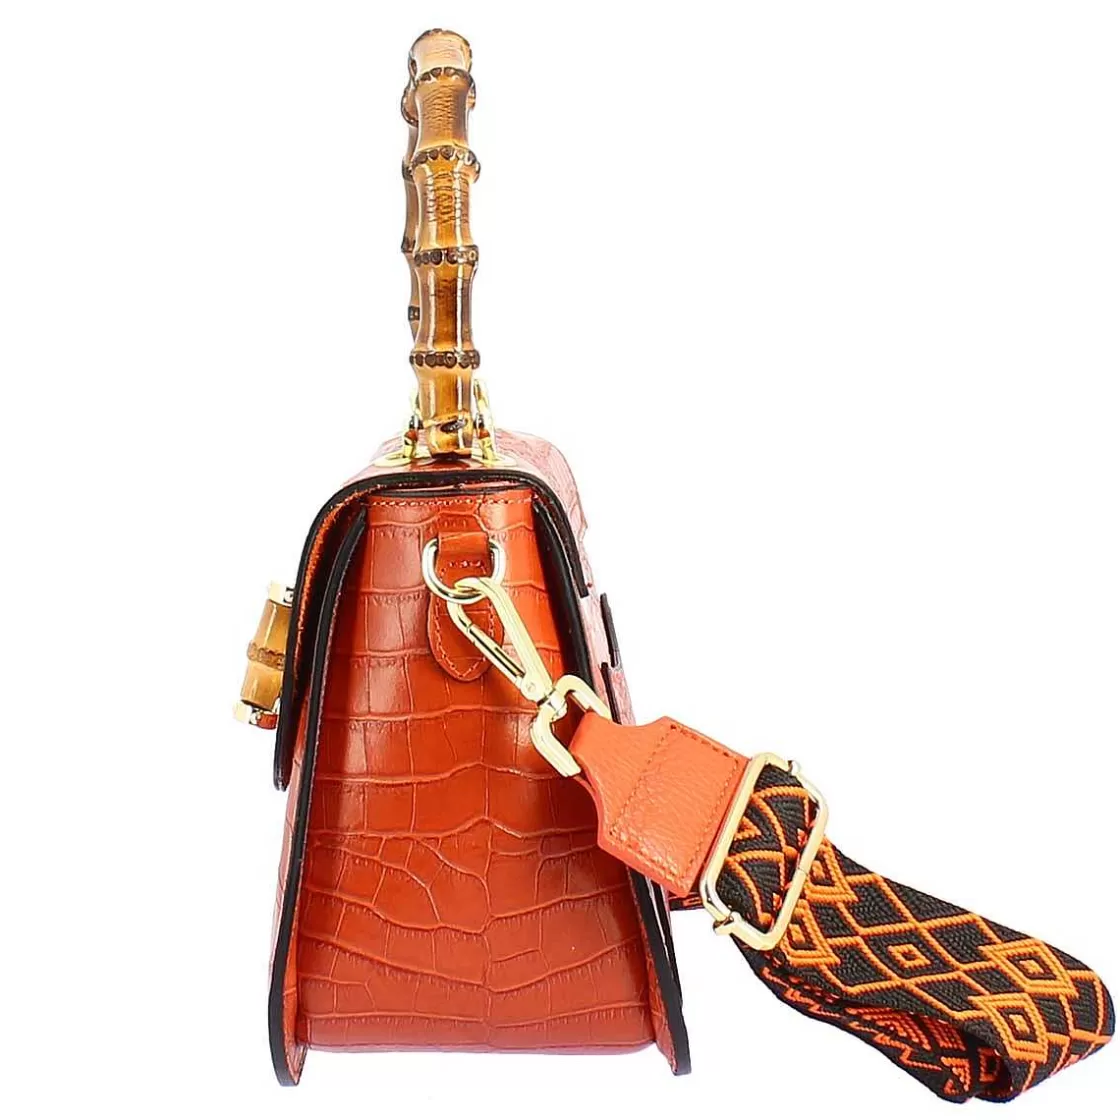 Leonardo Handmade Women'S Handbag In Orange Leather With Removable Shoulder Strap Cheap